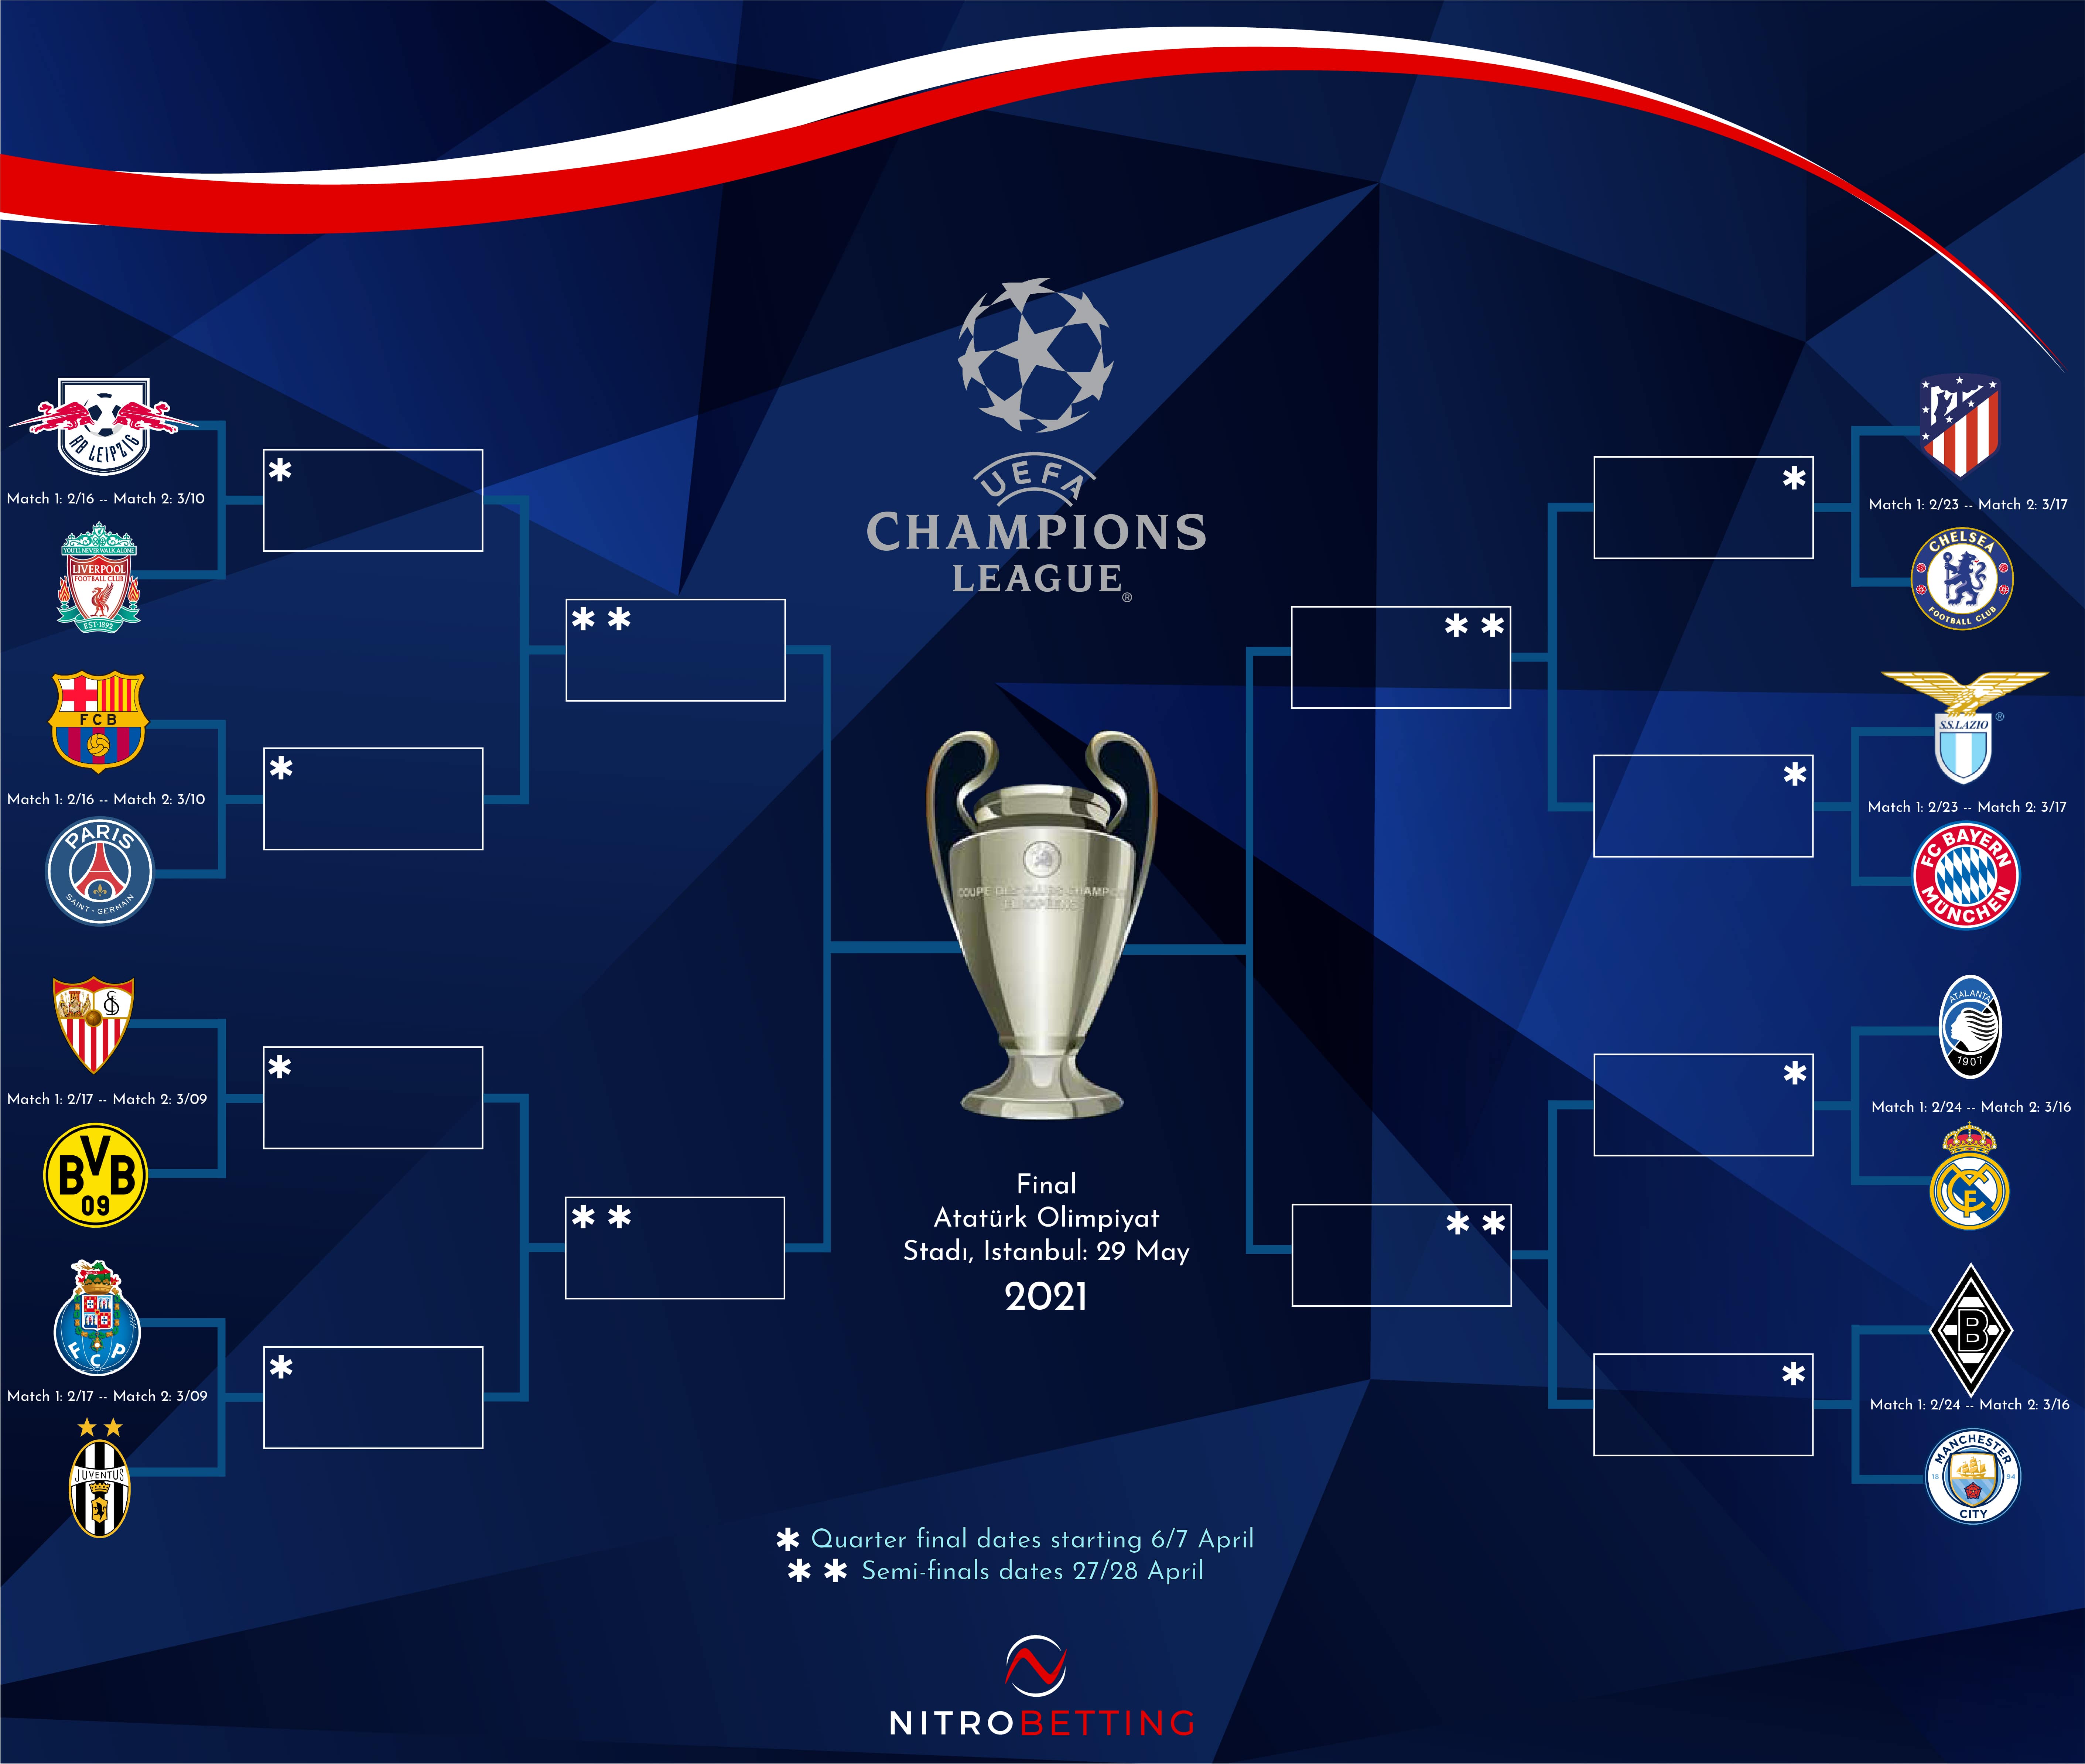 2021 UEFA Champions League Bracket NitroBetting BTC Sportsbook